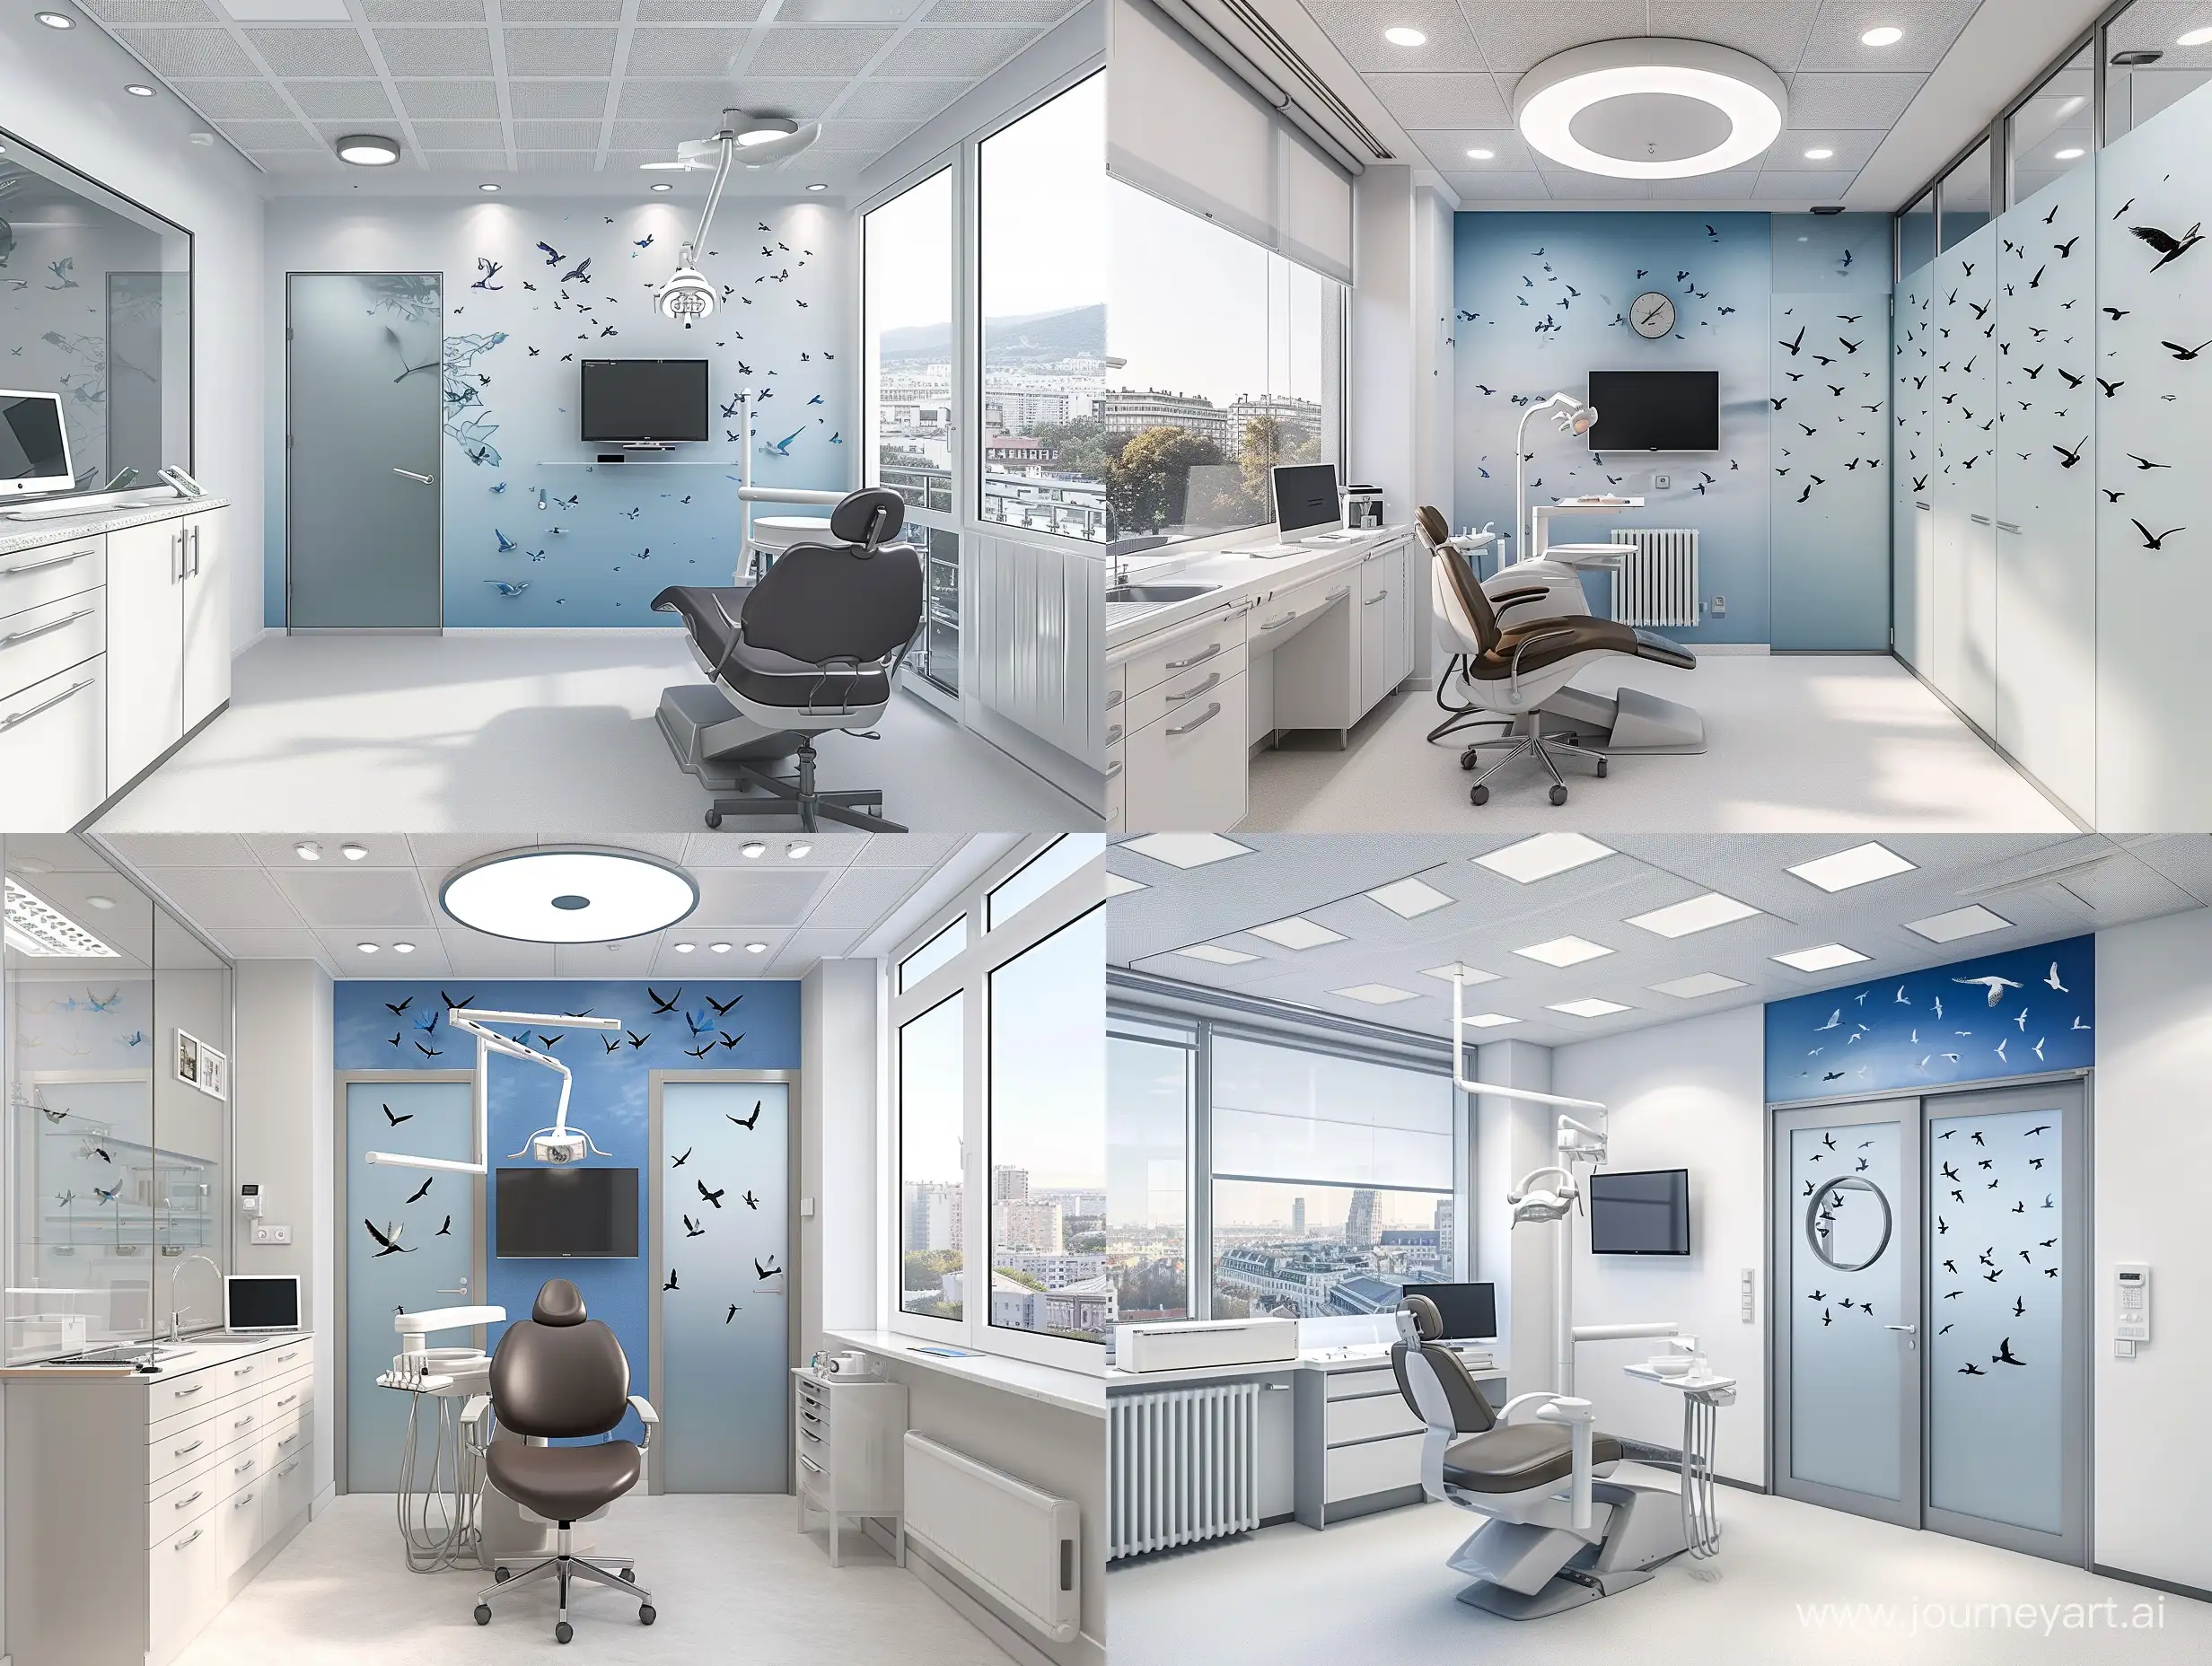 Modern-Dental-Office-with-RAL-8025-Aluminum-Doors-and-Blue-Bird-Mural